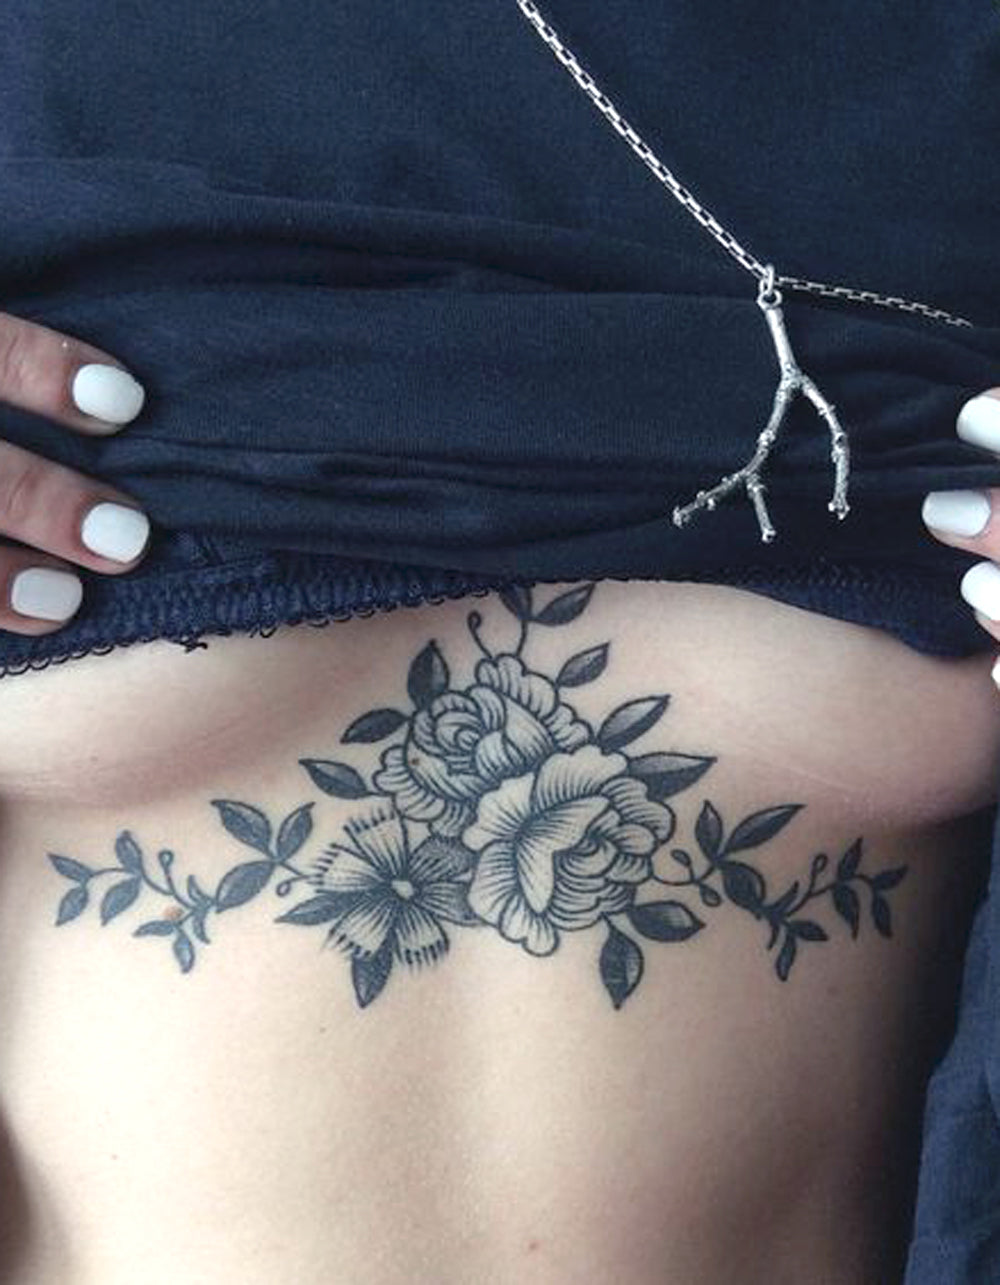 Nature Rose Sternum Tattoo Ideas for Women - Black and White Leaf Tree Chest Tatt -  ideas de tatuaje de pecho de rosa de flor blanco y negro - www.MyBodiArt.com 